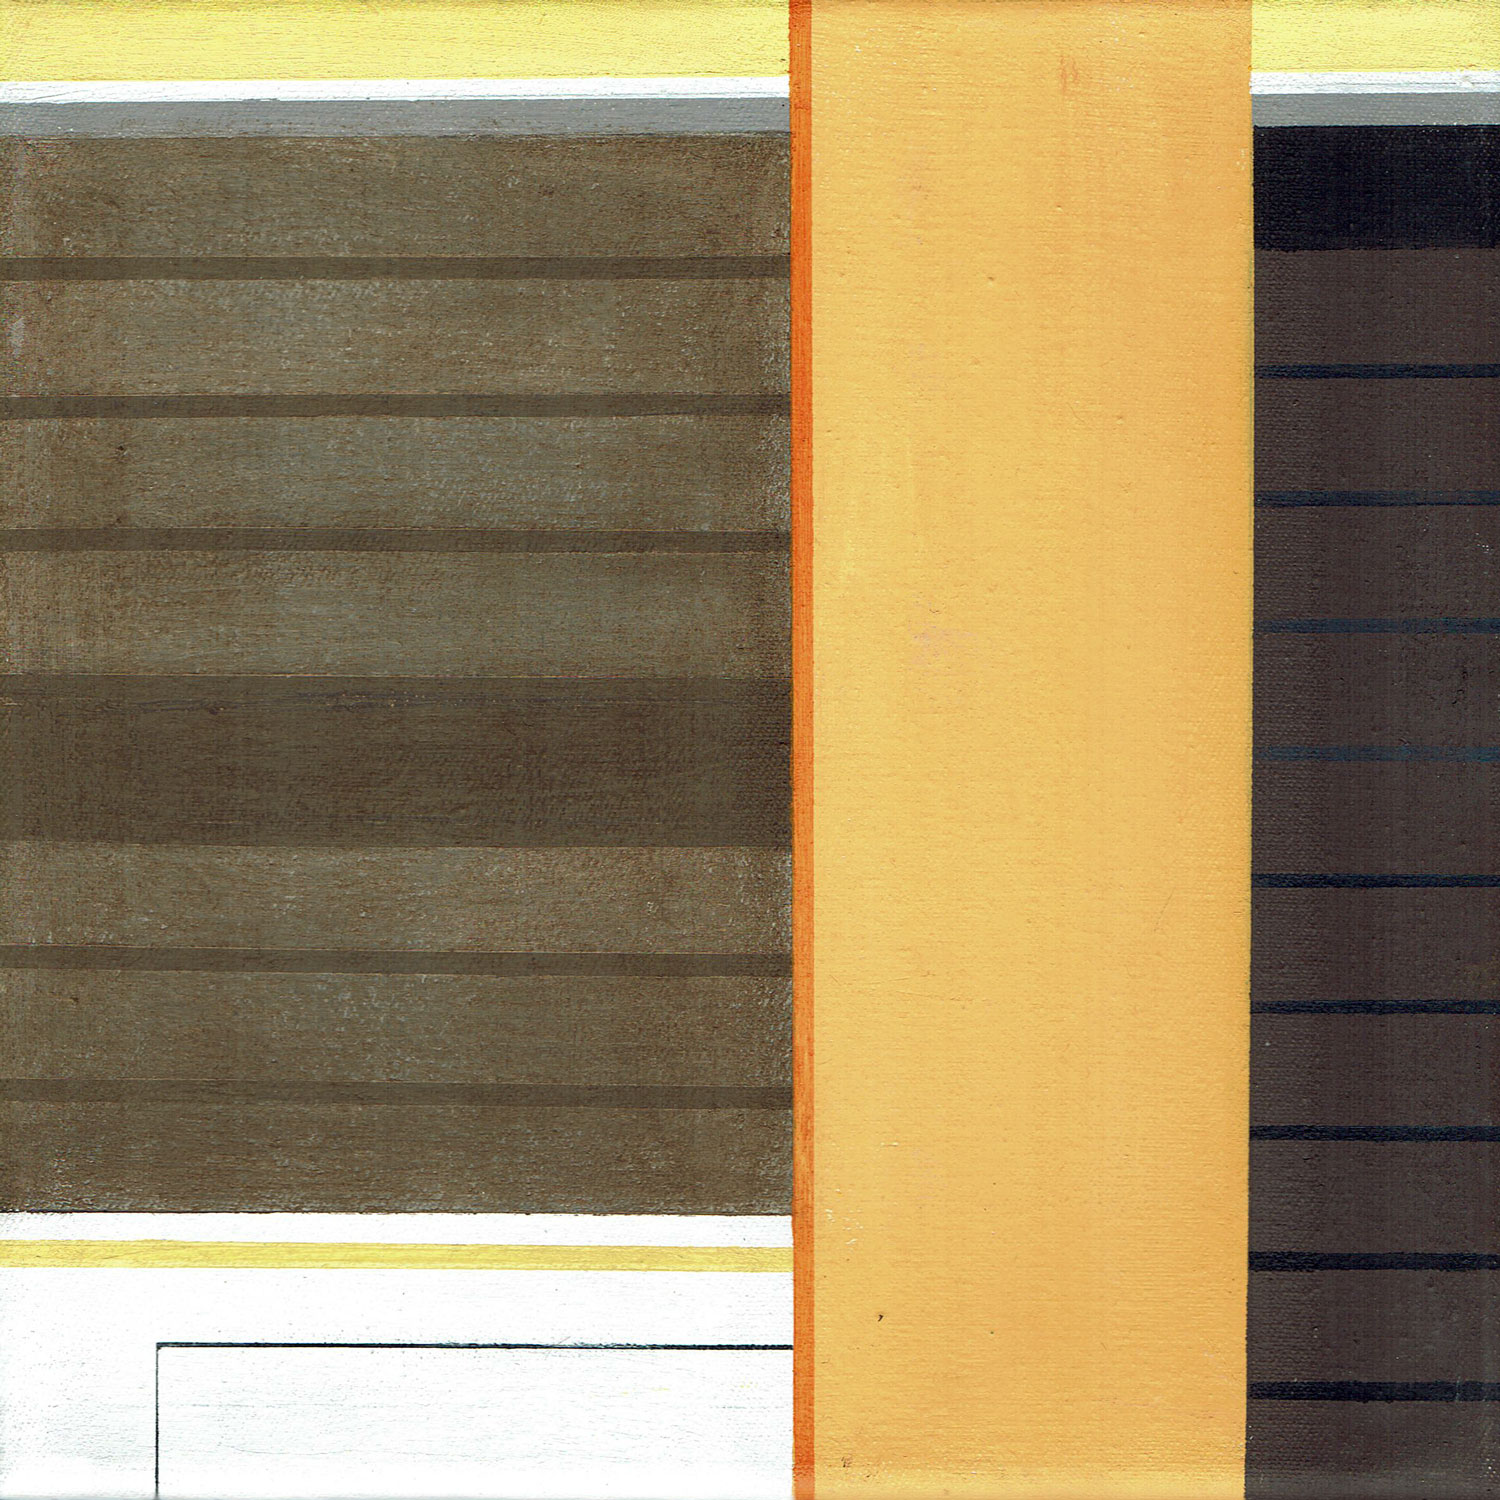 Südsee 4, 2017, 20 x 20 cm, Öl:Lw